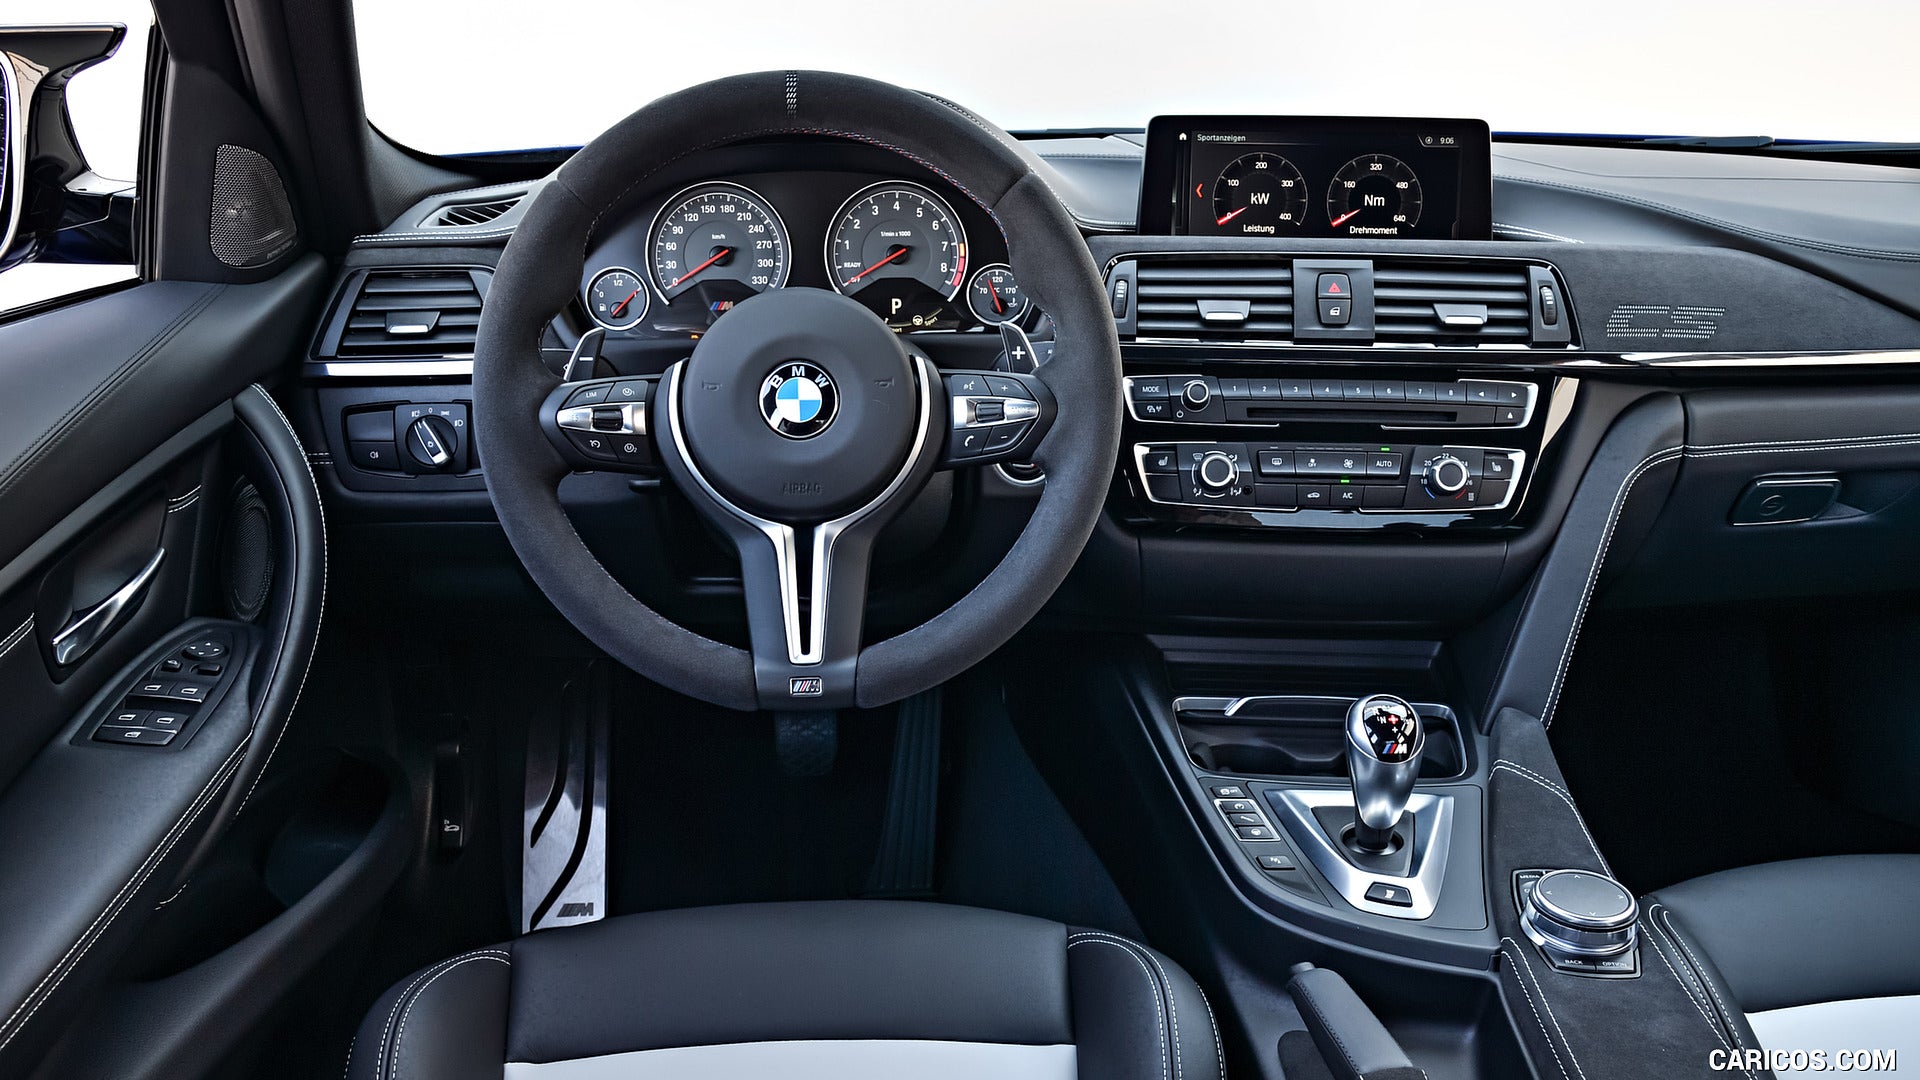 BMW Carbon Fibre Interior Gear Knob Cover M5 F10 F85 F86 X5M X6M